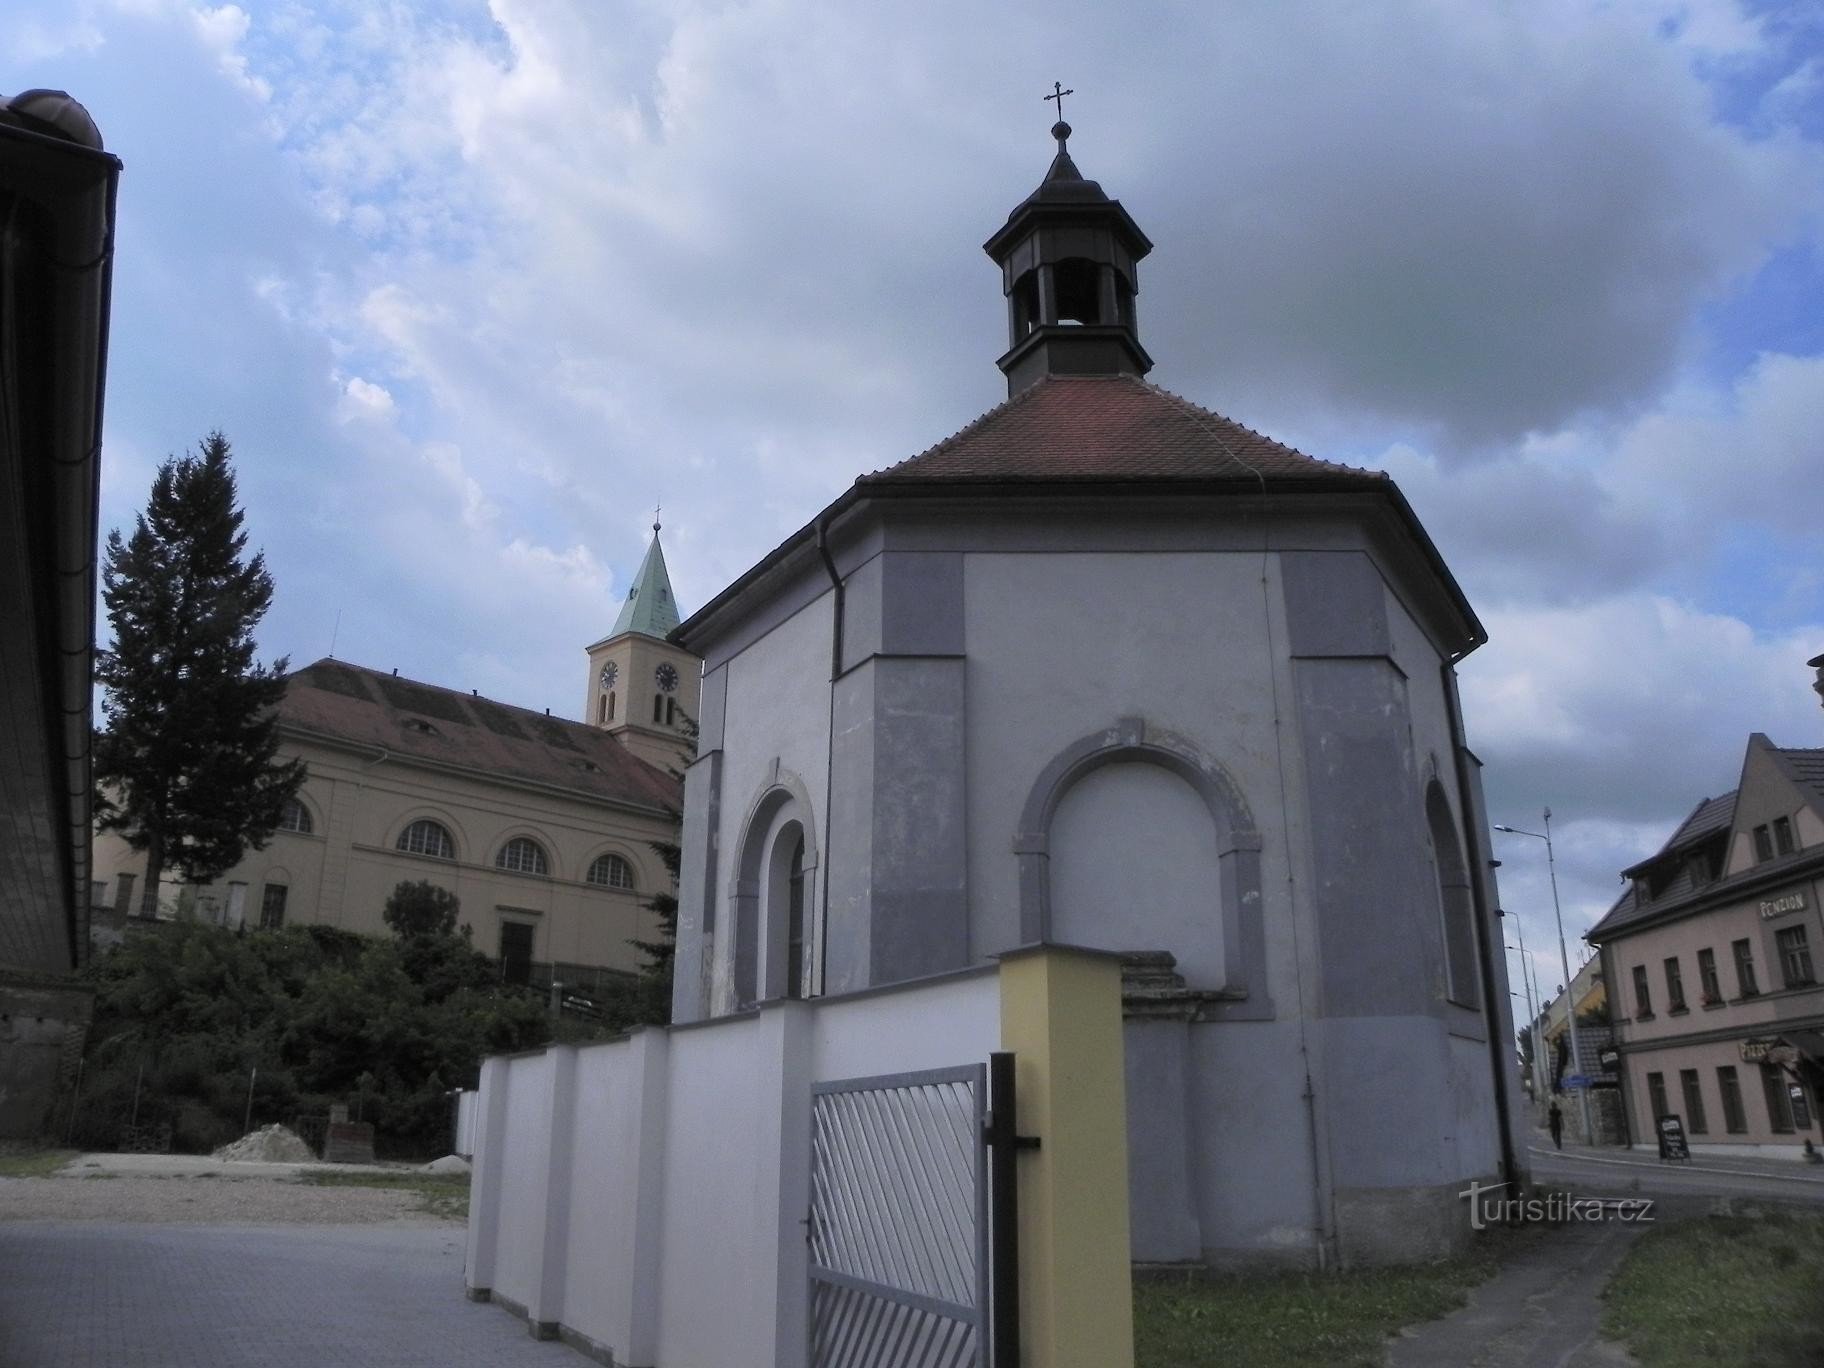 Stod, igreja e capela de St. Venceslau